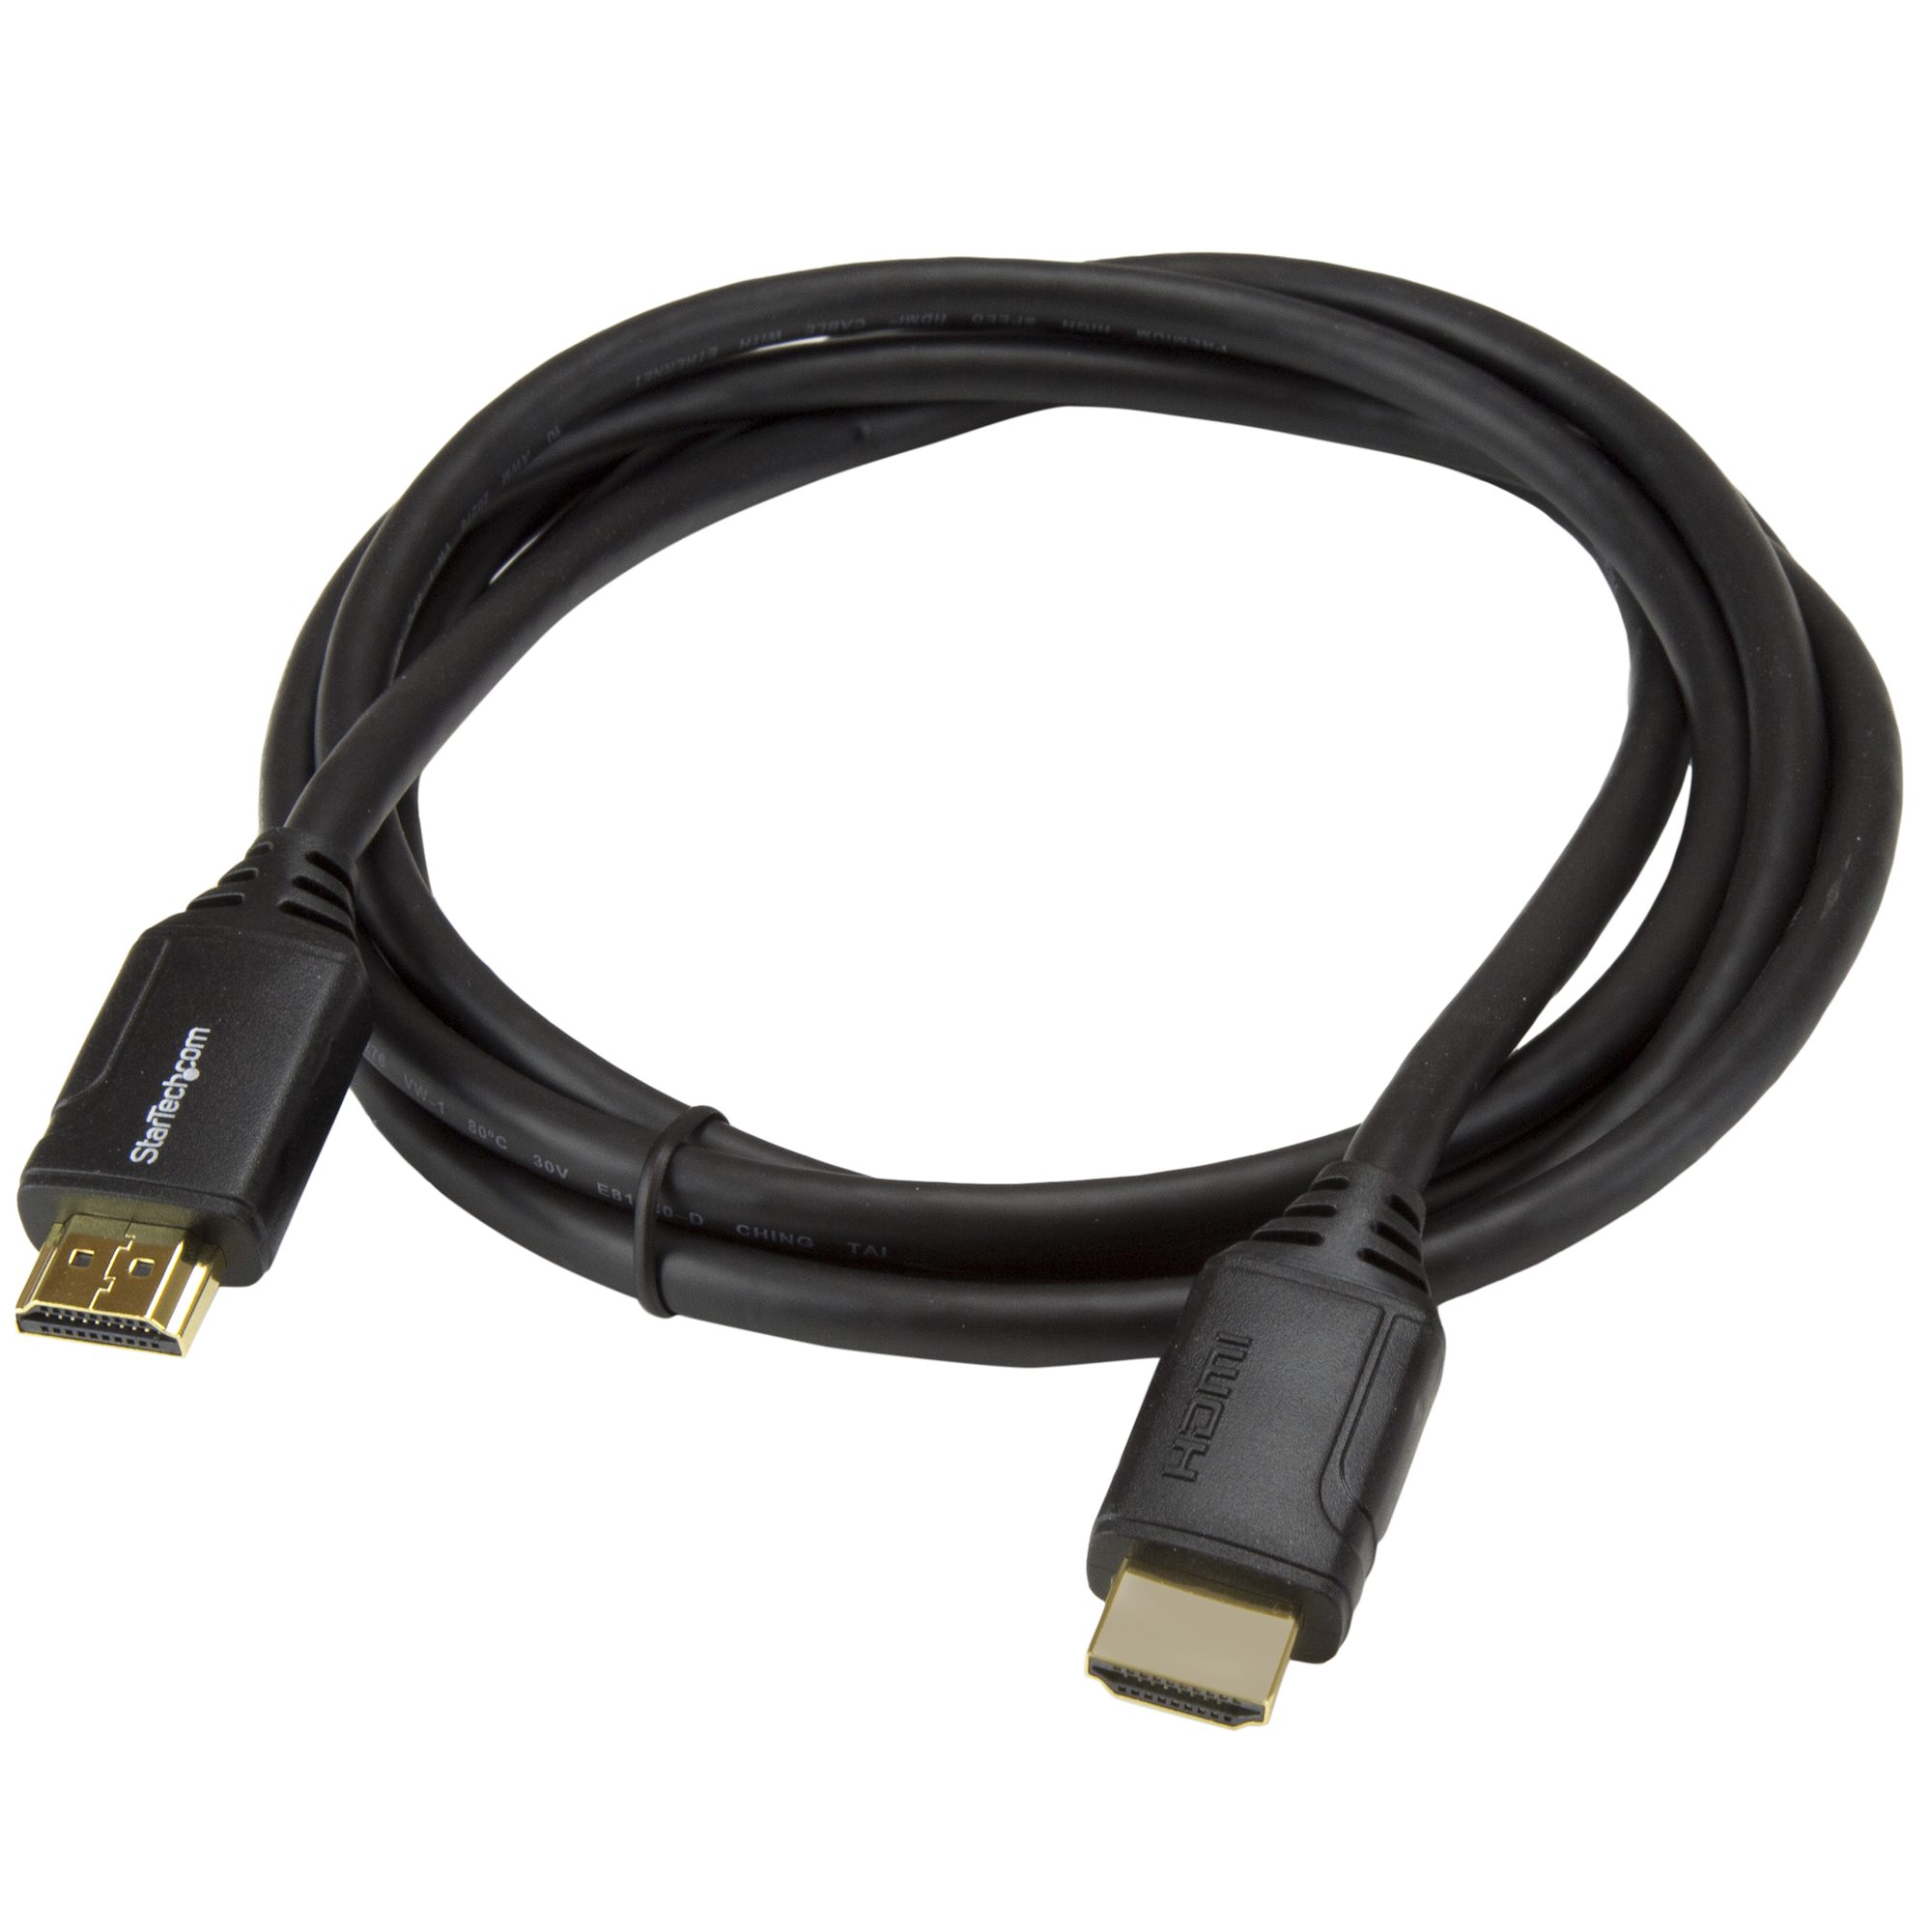 2 Meter Mini C HDMI Cable / 6 FT